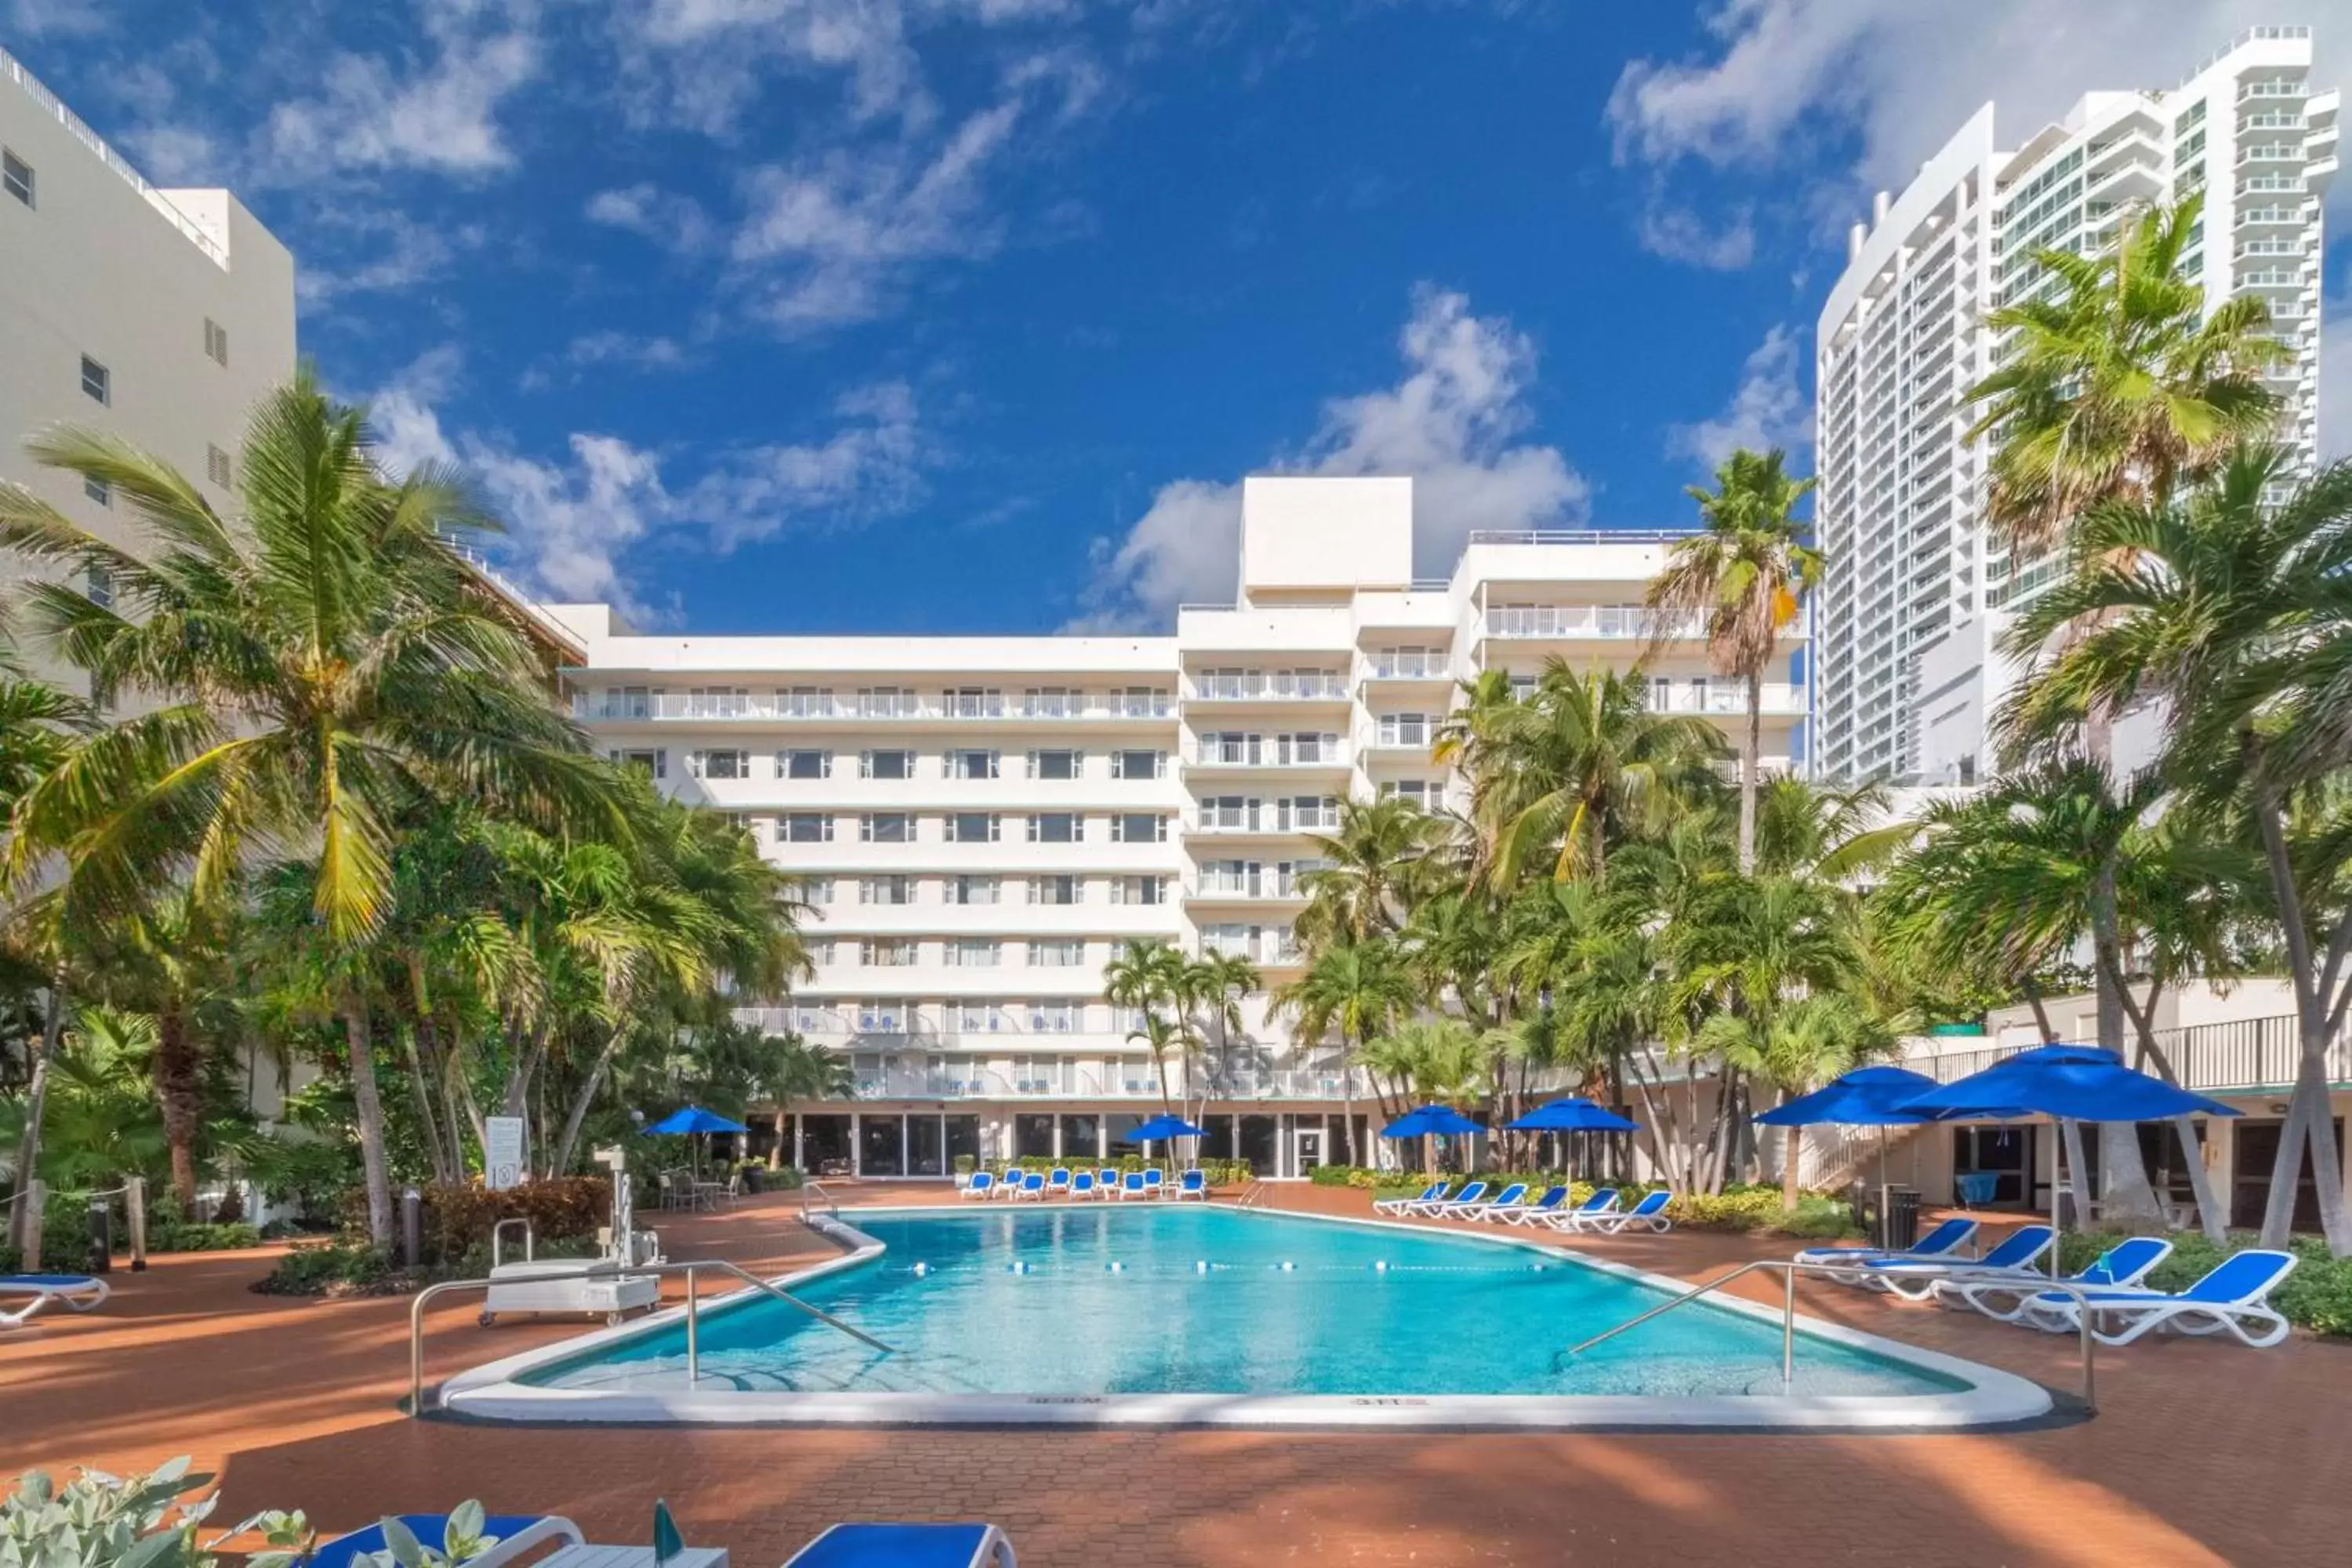 Pool view, Swimming Pool in Radisson Resort Miami Beach